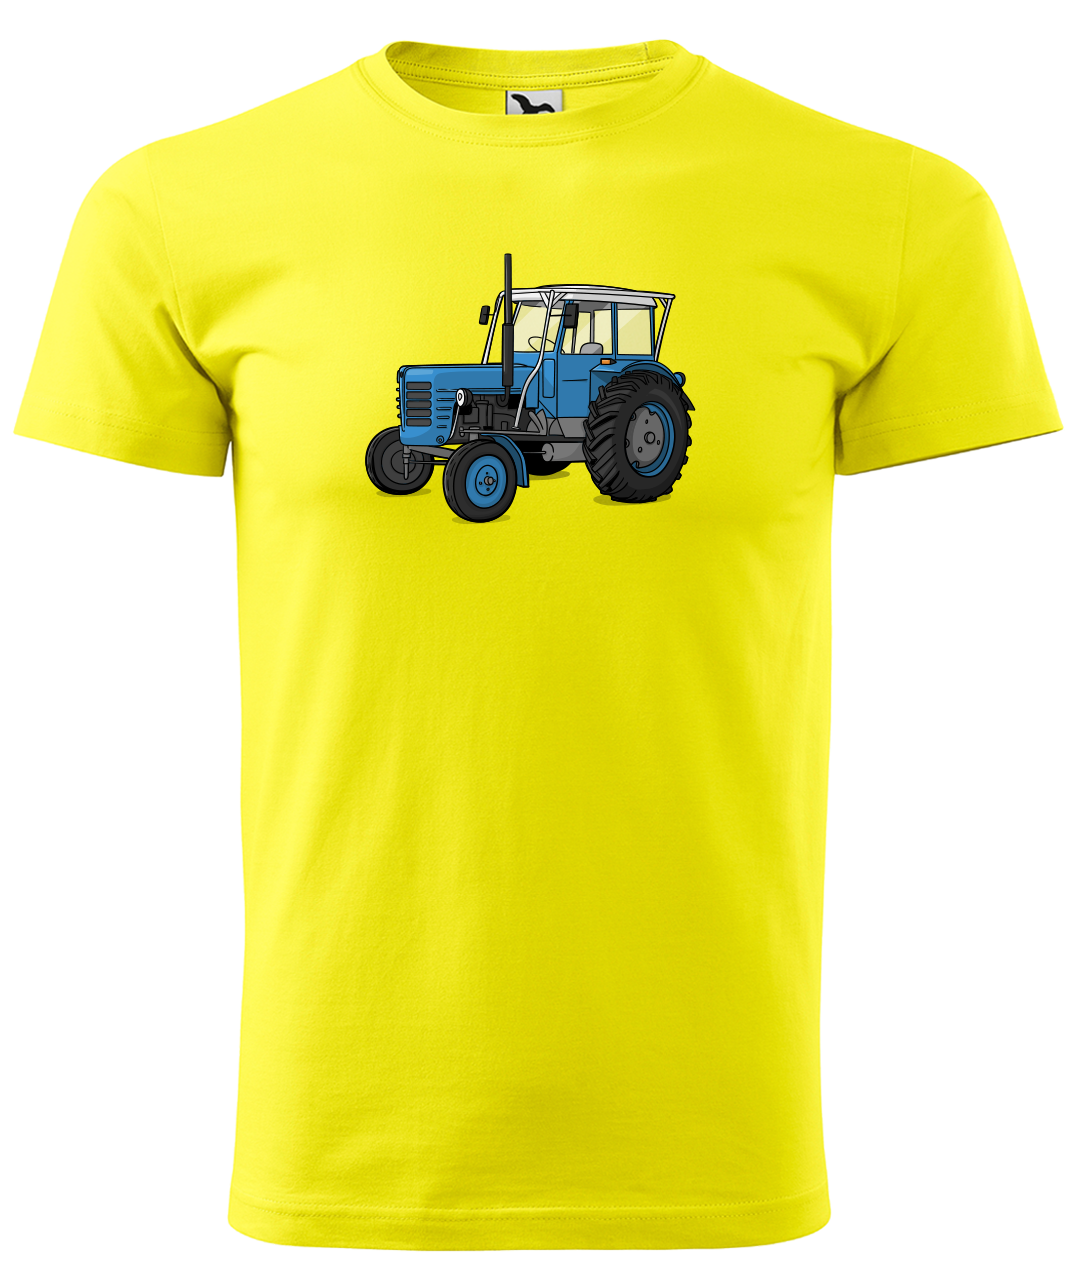 Dětské tričko s traktorem - Starý traktor Velikost: 4 roky / 110 cm, Barva: Žlutá (04)